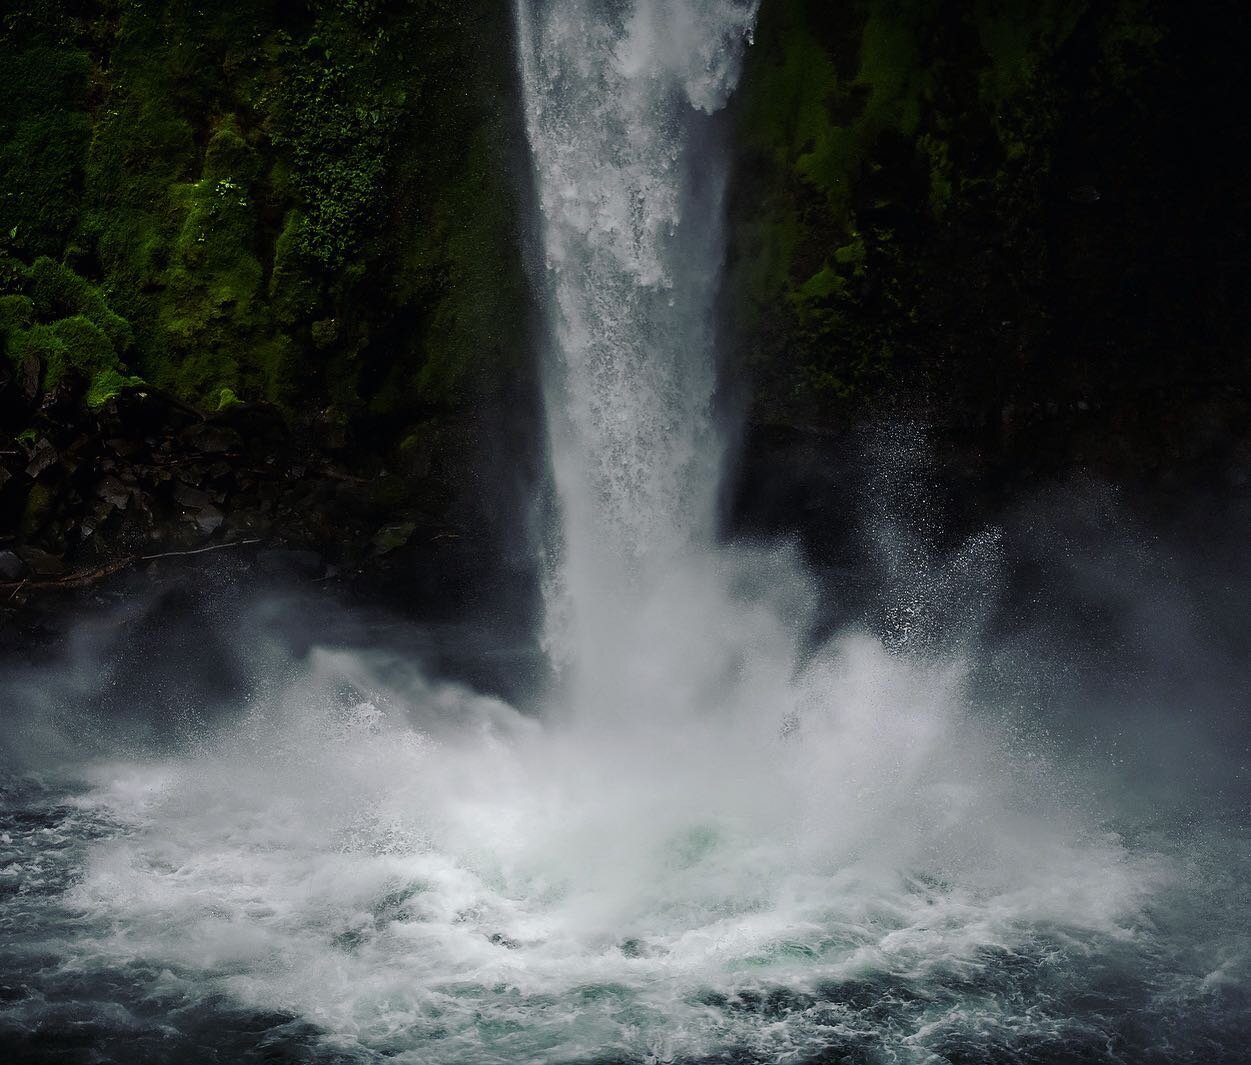 La Fortuna waterfall Costa Rica 2023
.
.

.
.
.
.
.
.
#powerful #waterfall #costarica #lafortuna #nature #travel #photography #explore